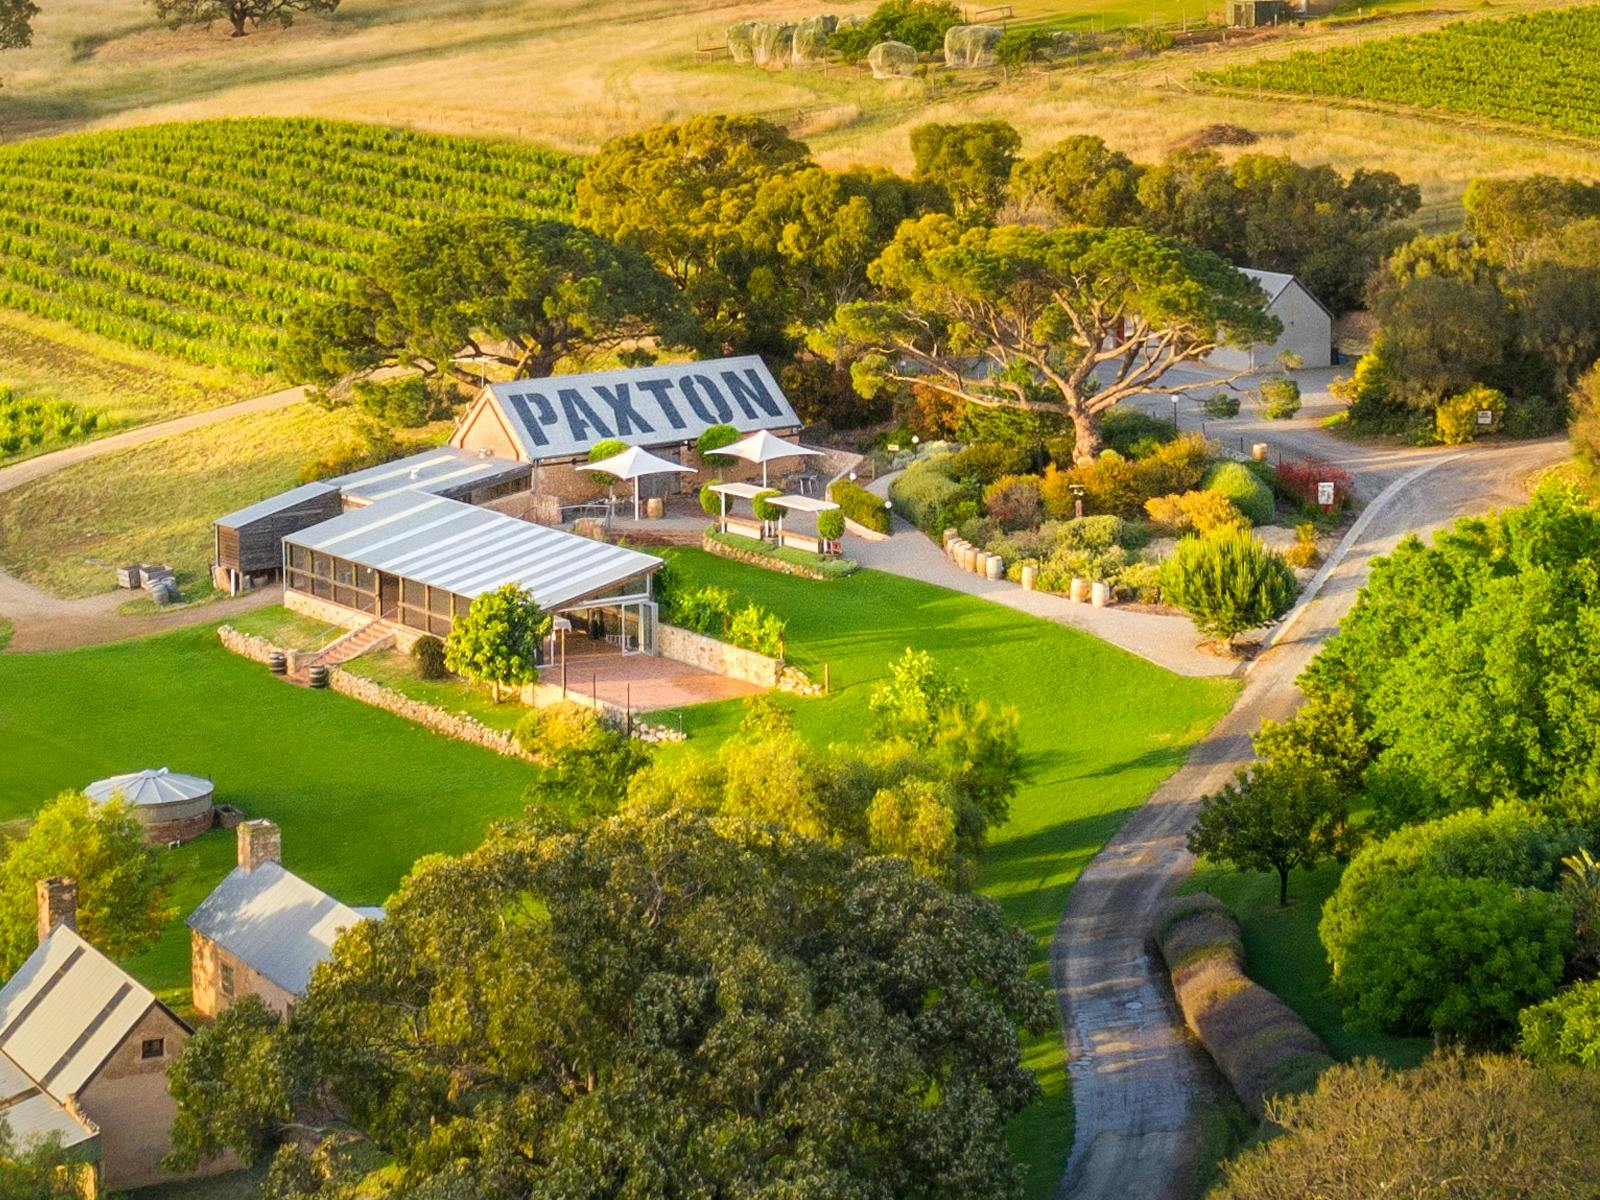 Paxton Wines' beautiful Landcross Farm